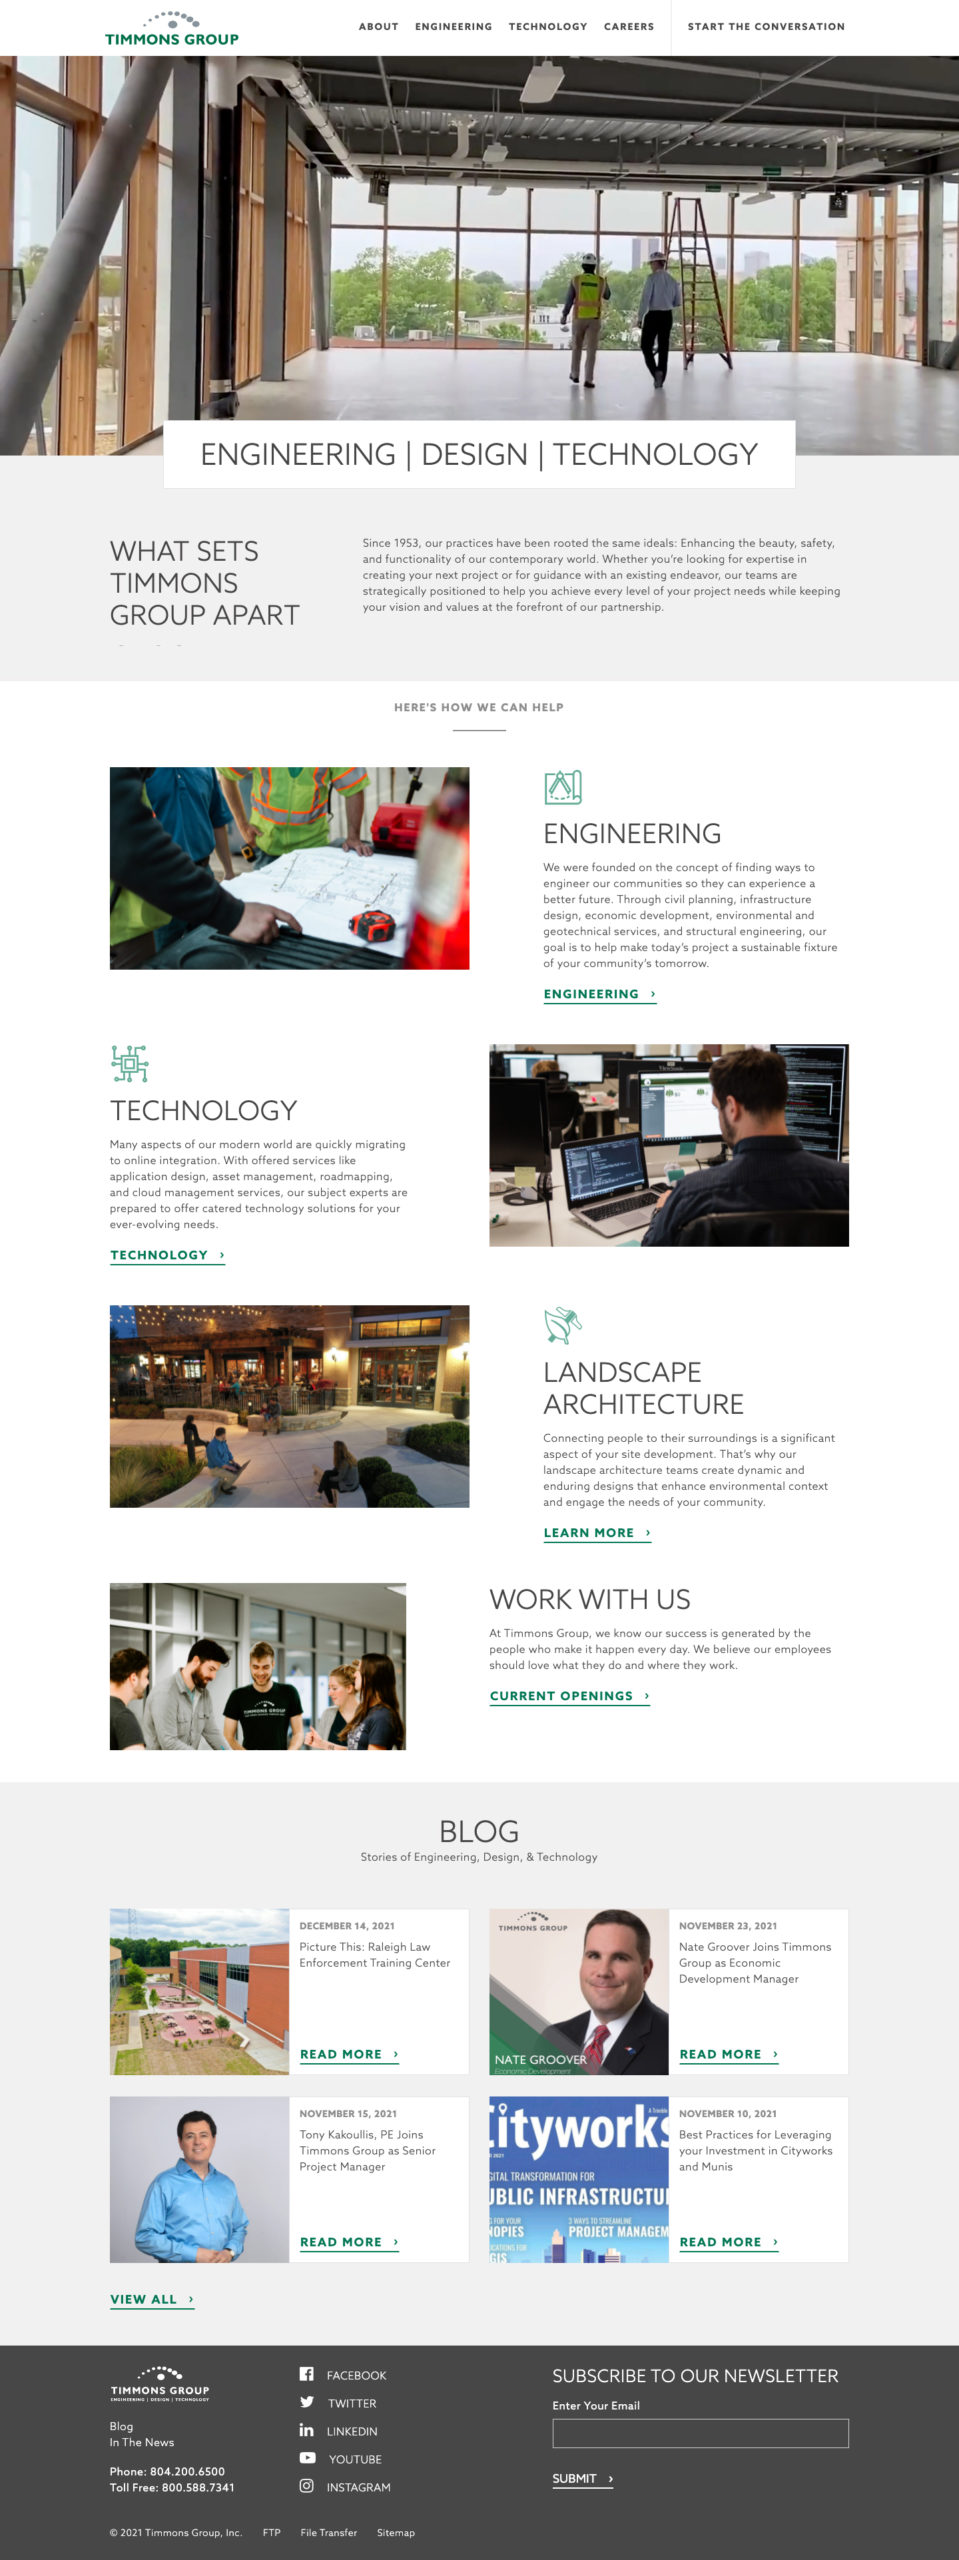 Website Design & Development for Timmons Group